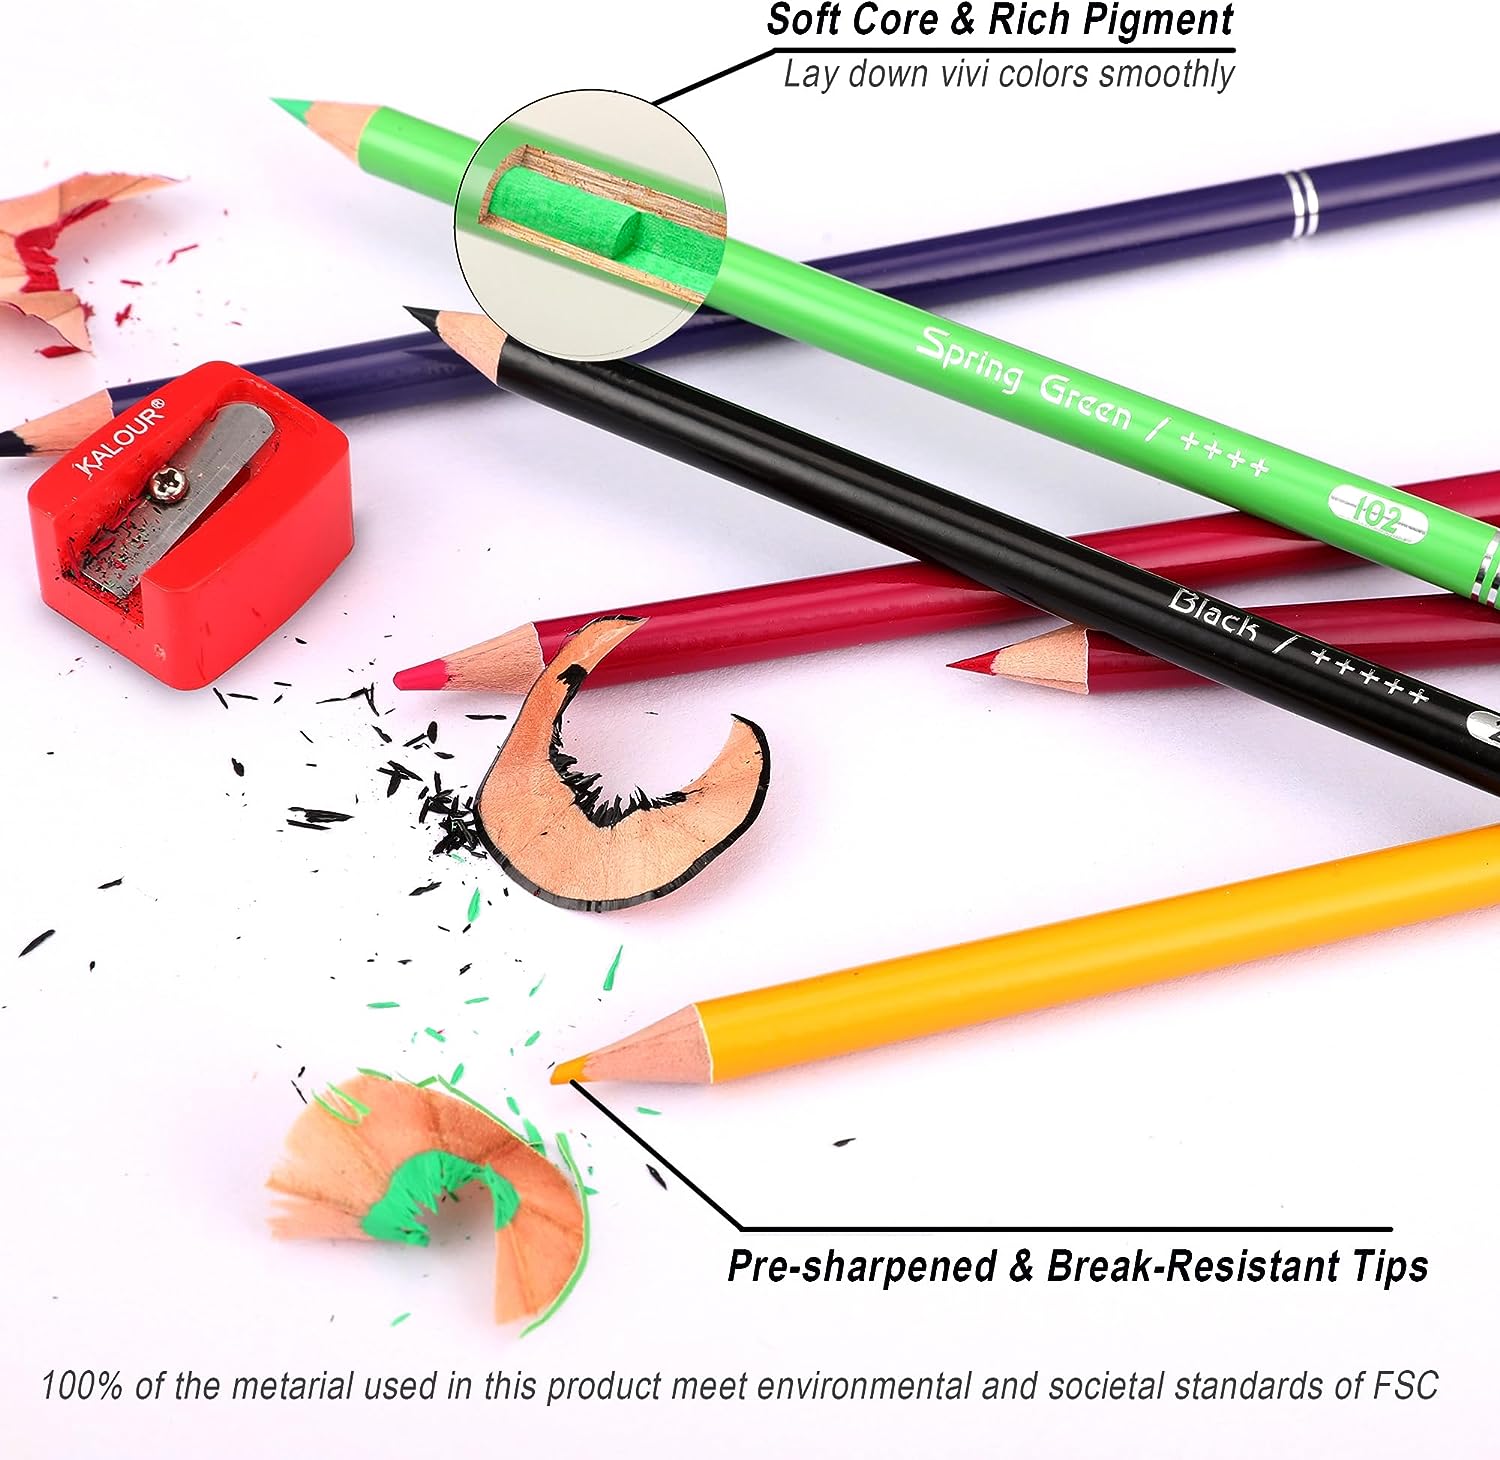 Kalour 520 Soft Touch Premium Colored Pencils DIY Color Swatch Book Style 1  